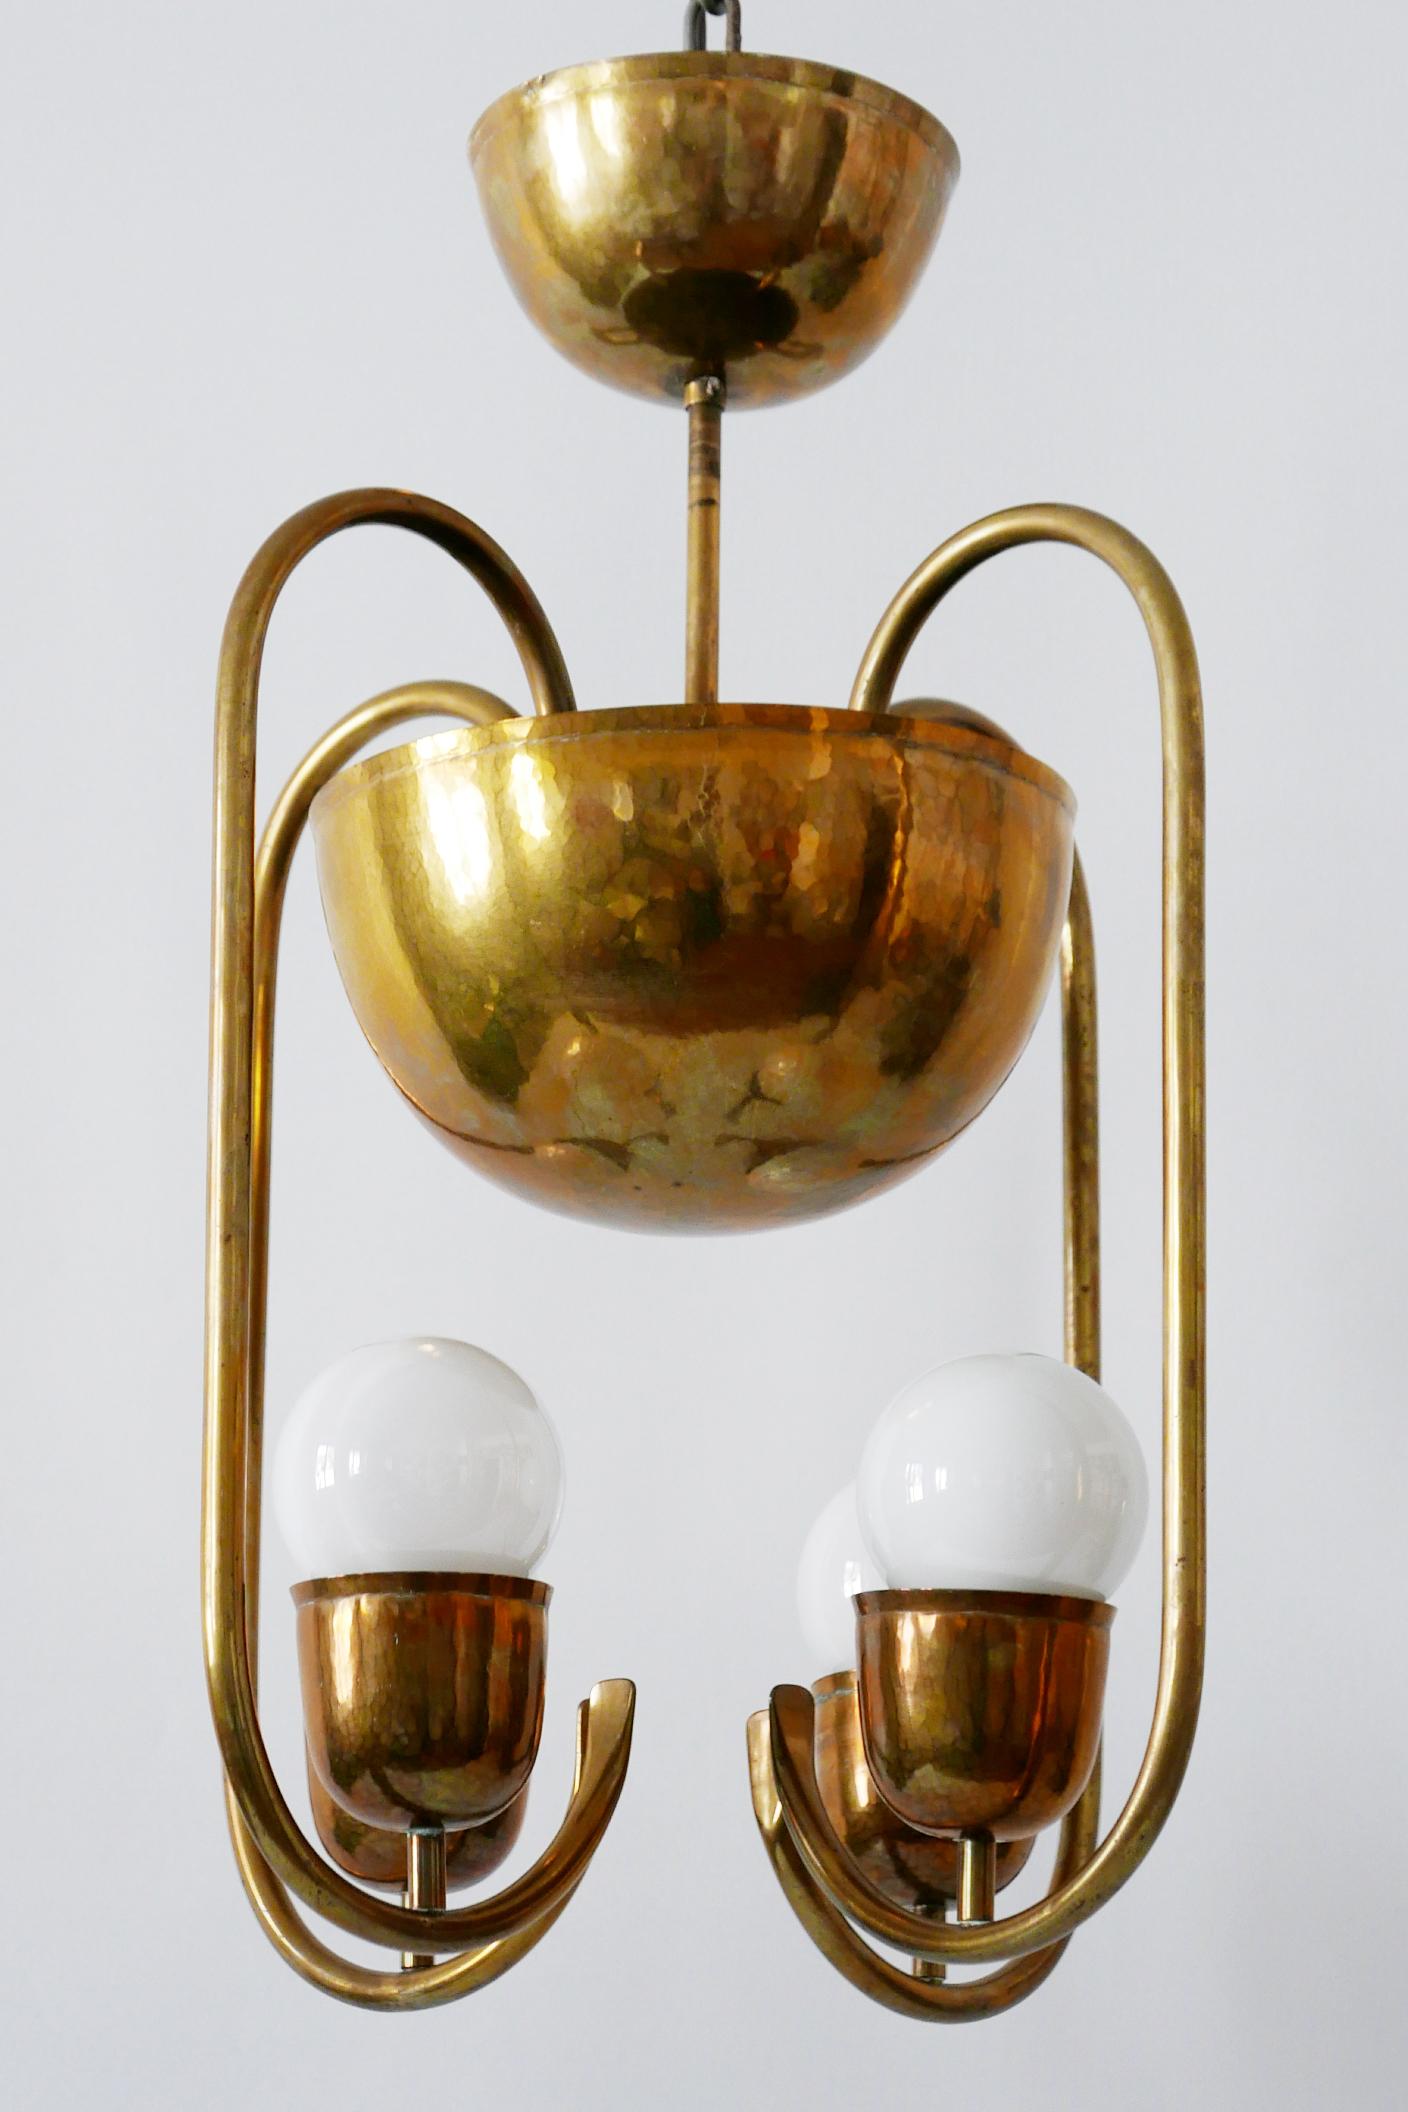 Unique Bauhaus Art Deco Brass Chandelier or Pendant Lamp by Hayno Focken 1930s For Sale 6